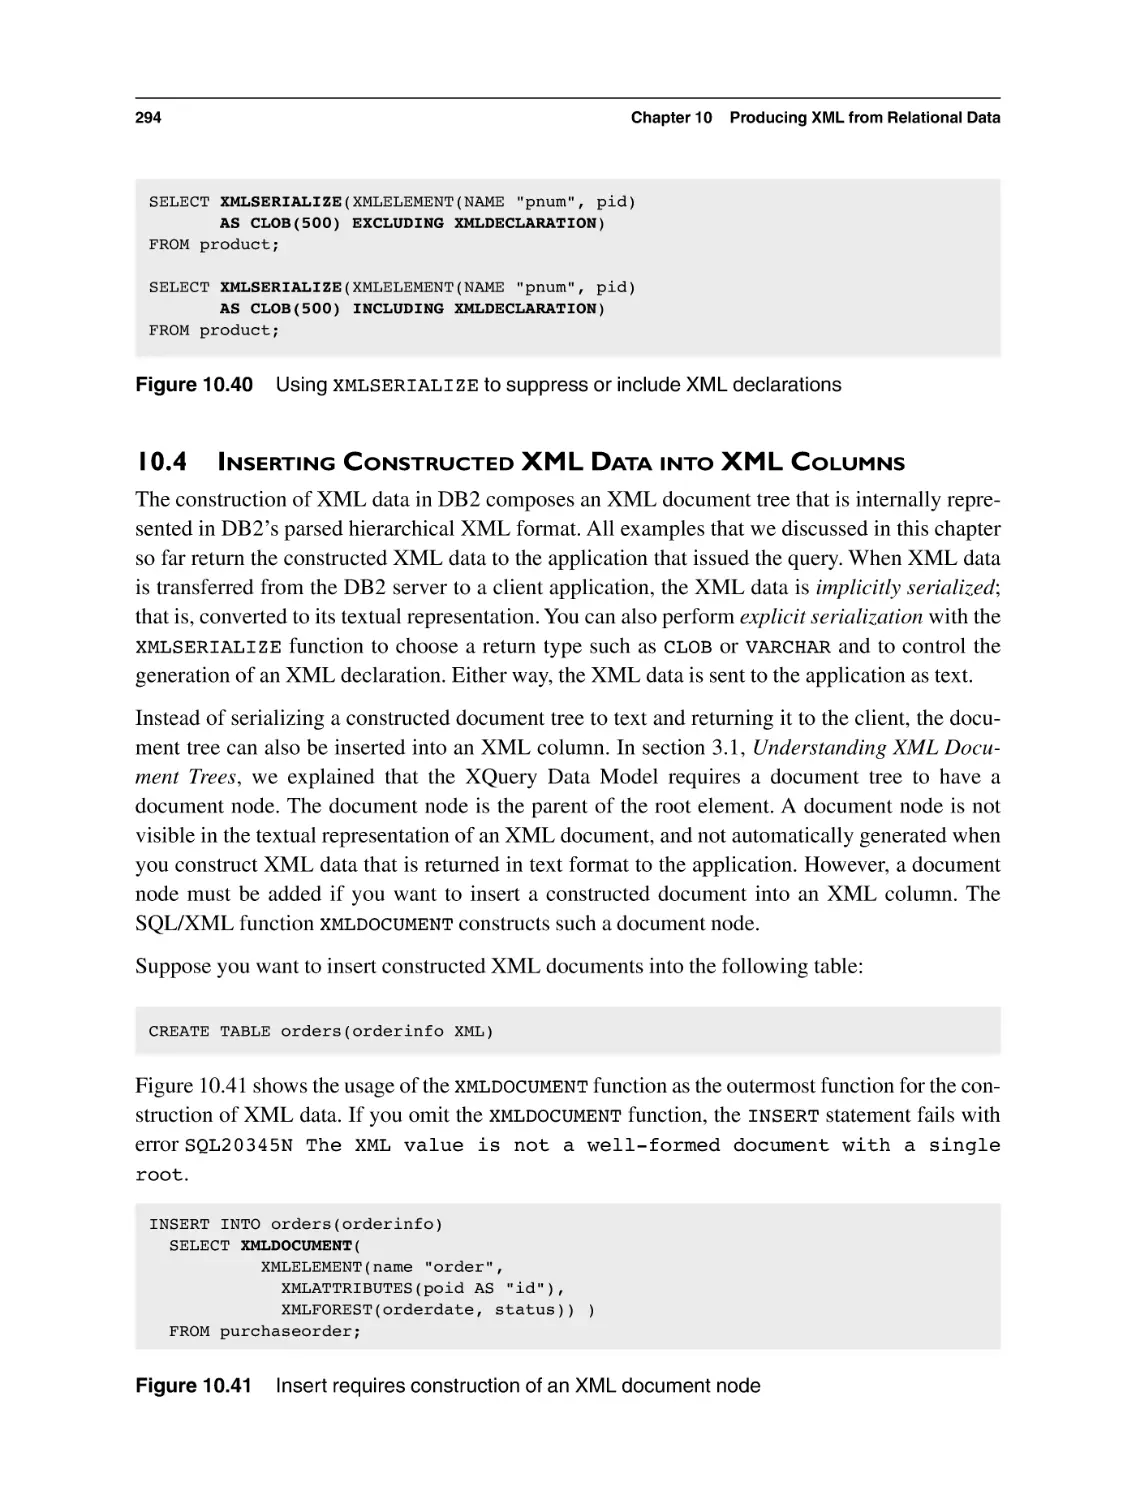 10.4 Inserting Constructed XML Data into XML Columns